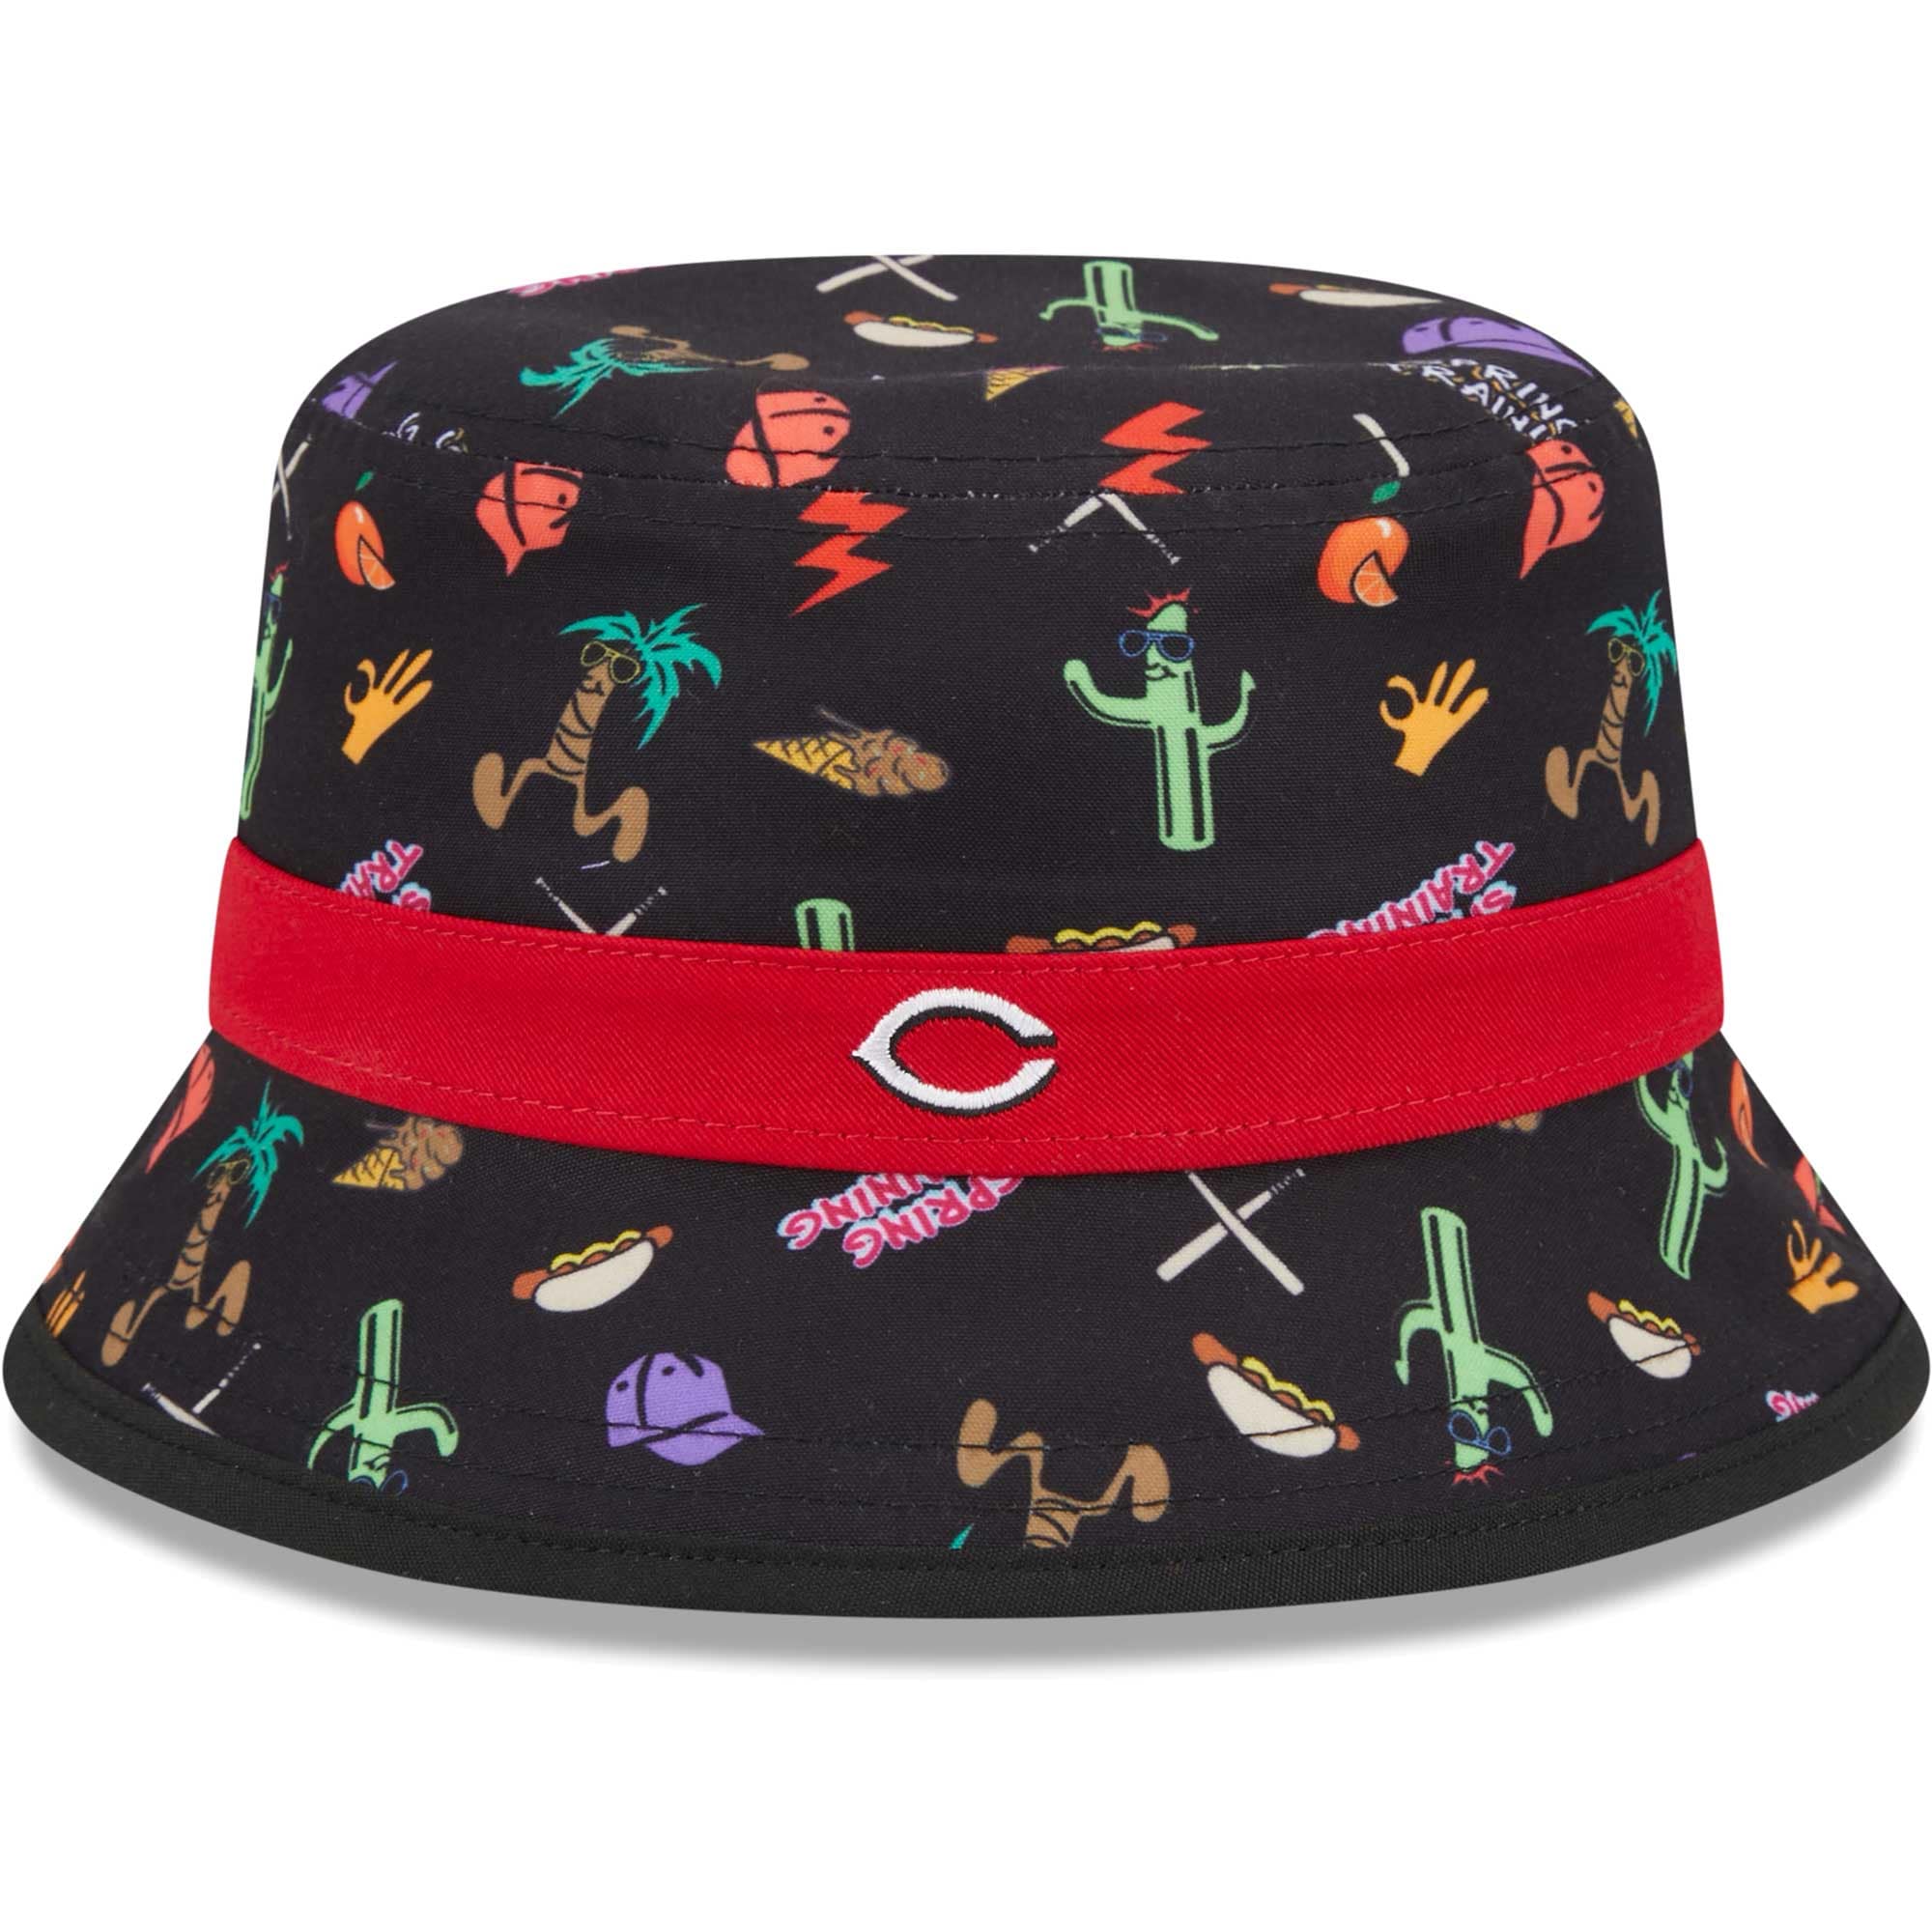 Cincinnati reds hats: Show Your Team Spirit插图4